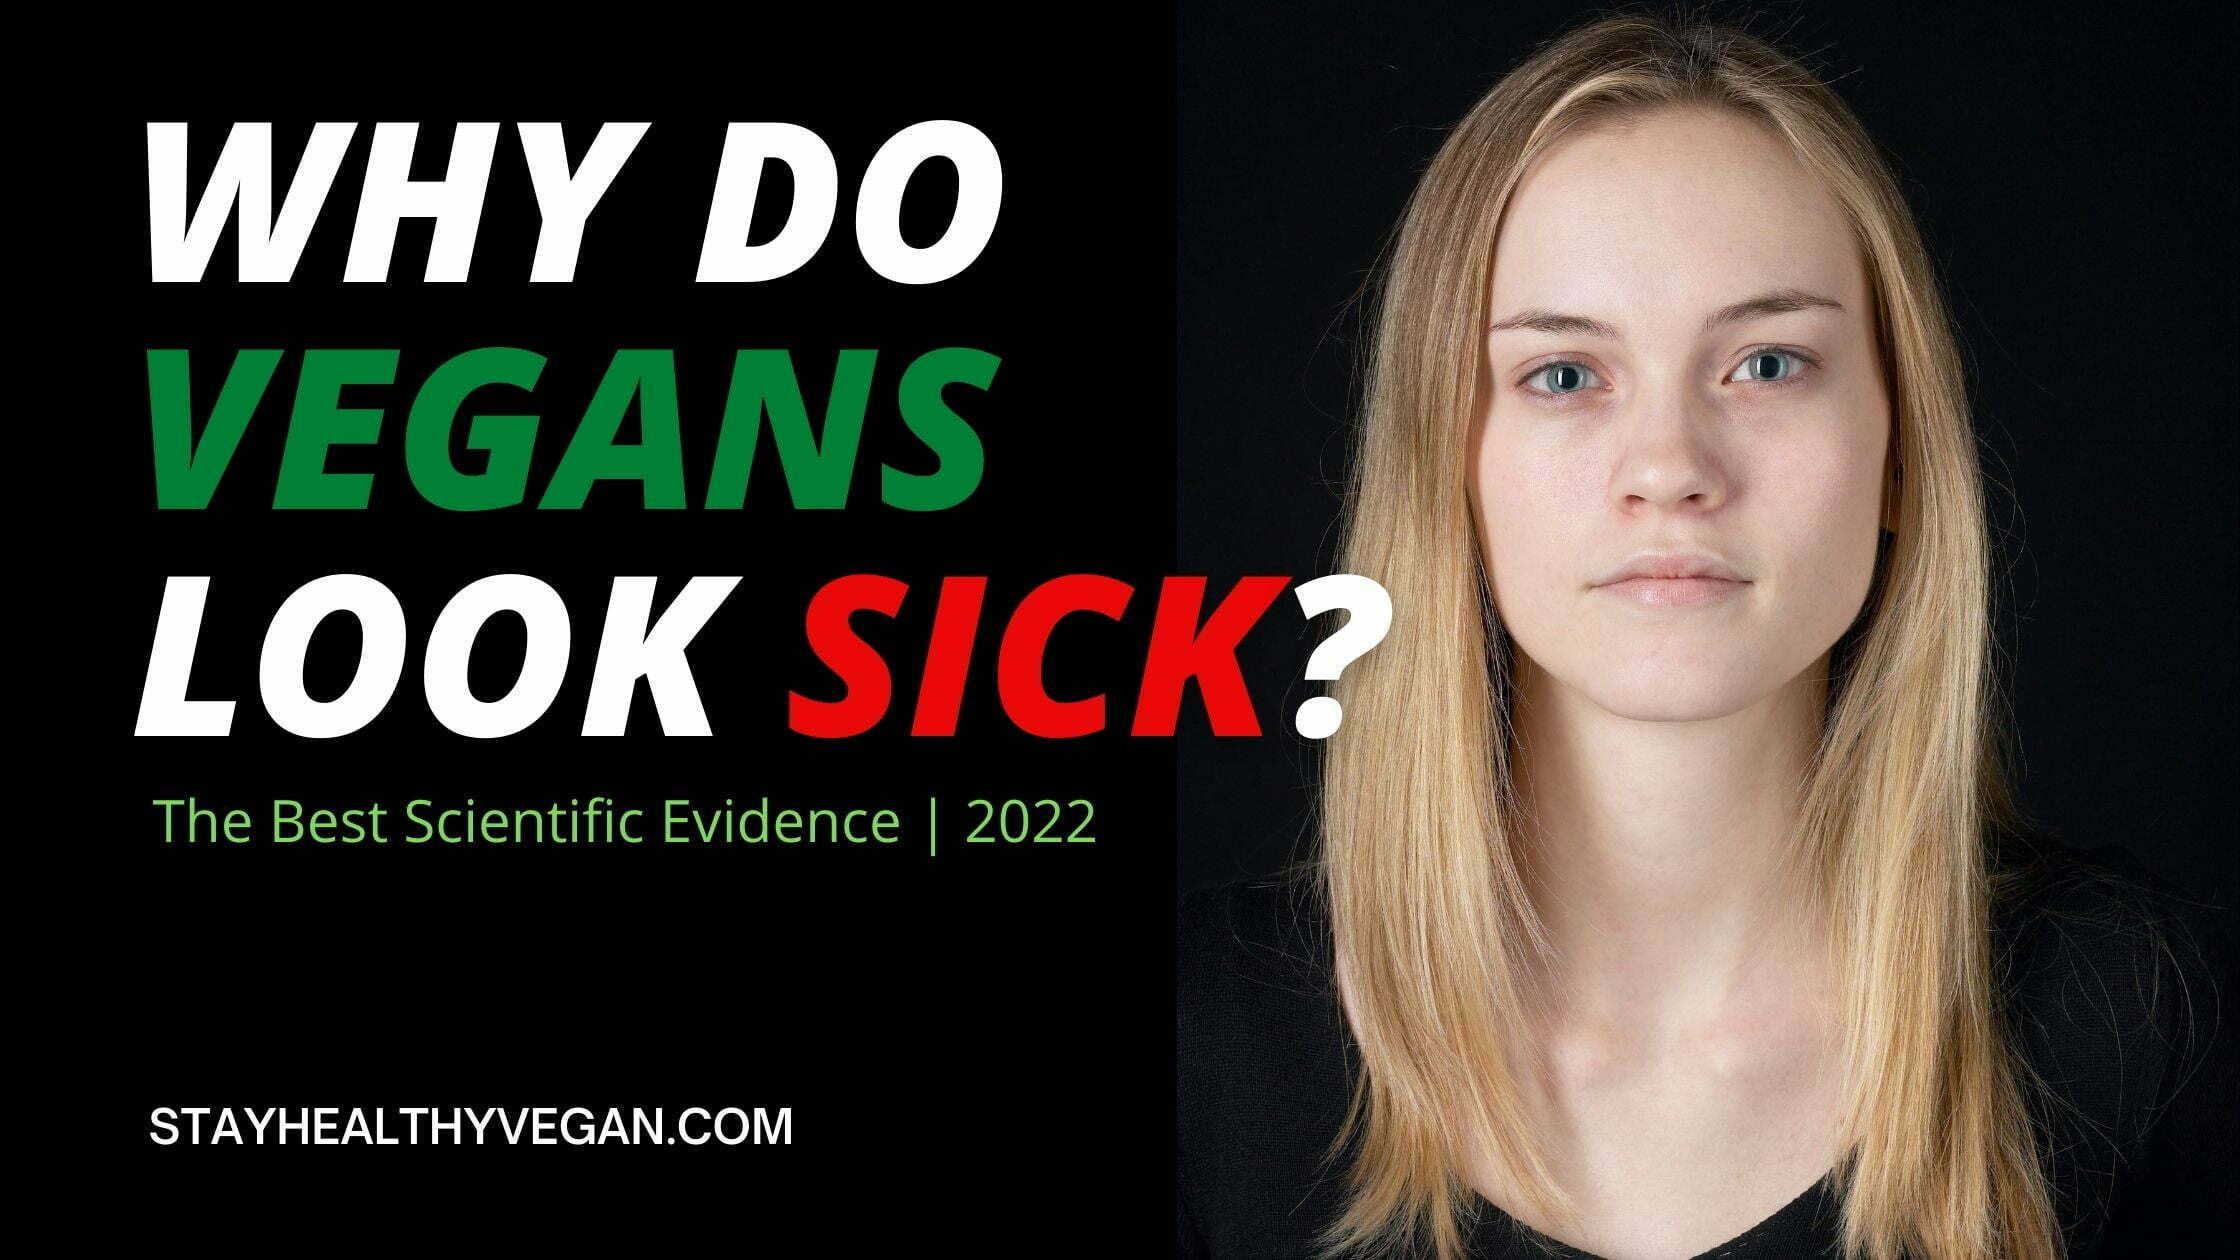 Why Do Vegans Look Sick